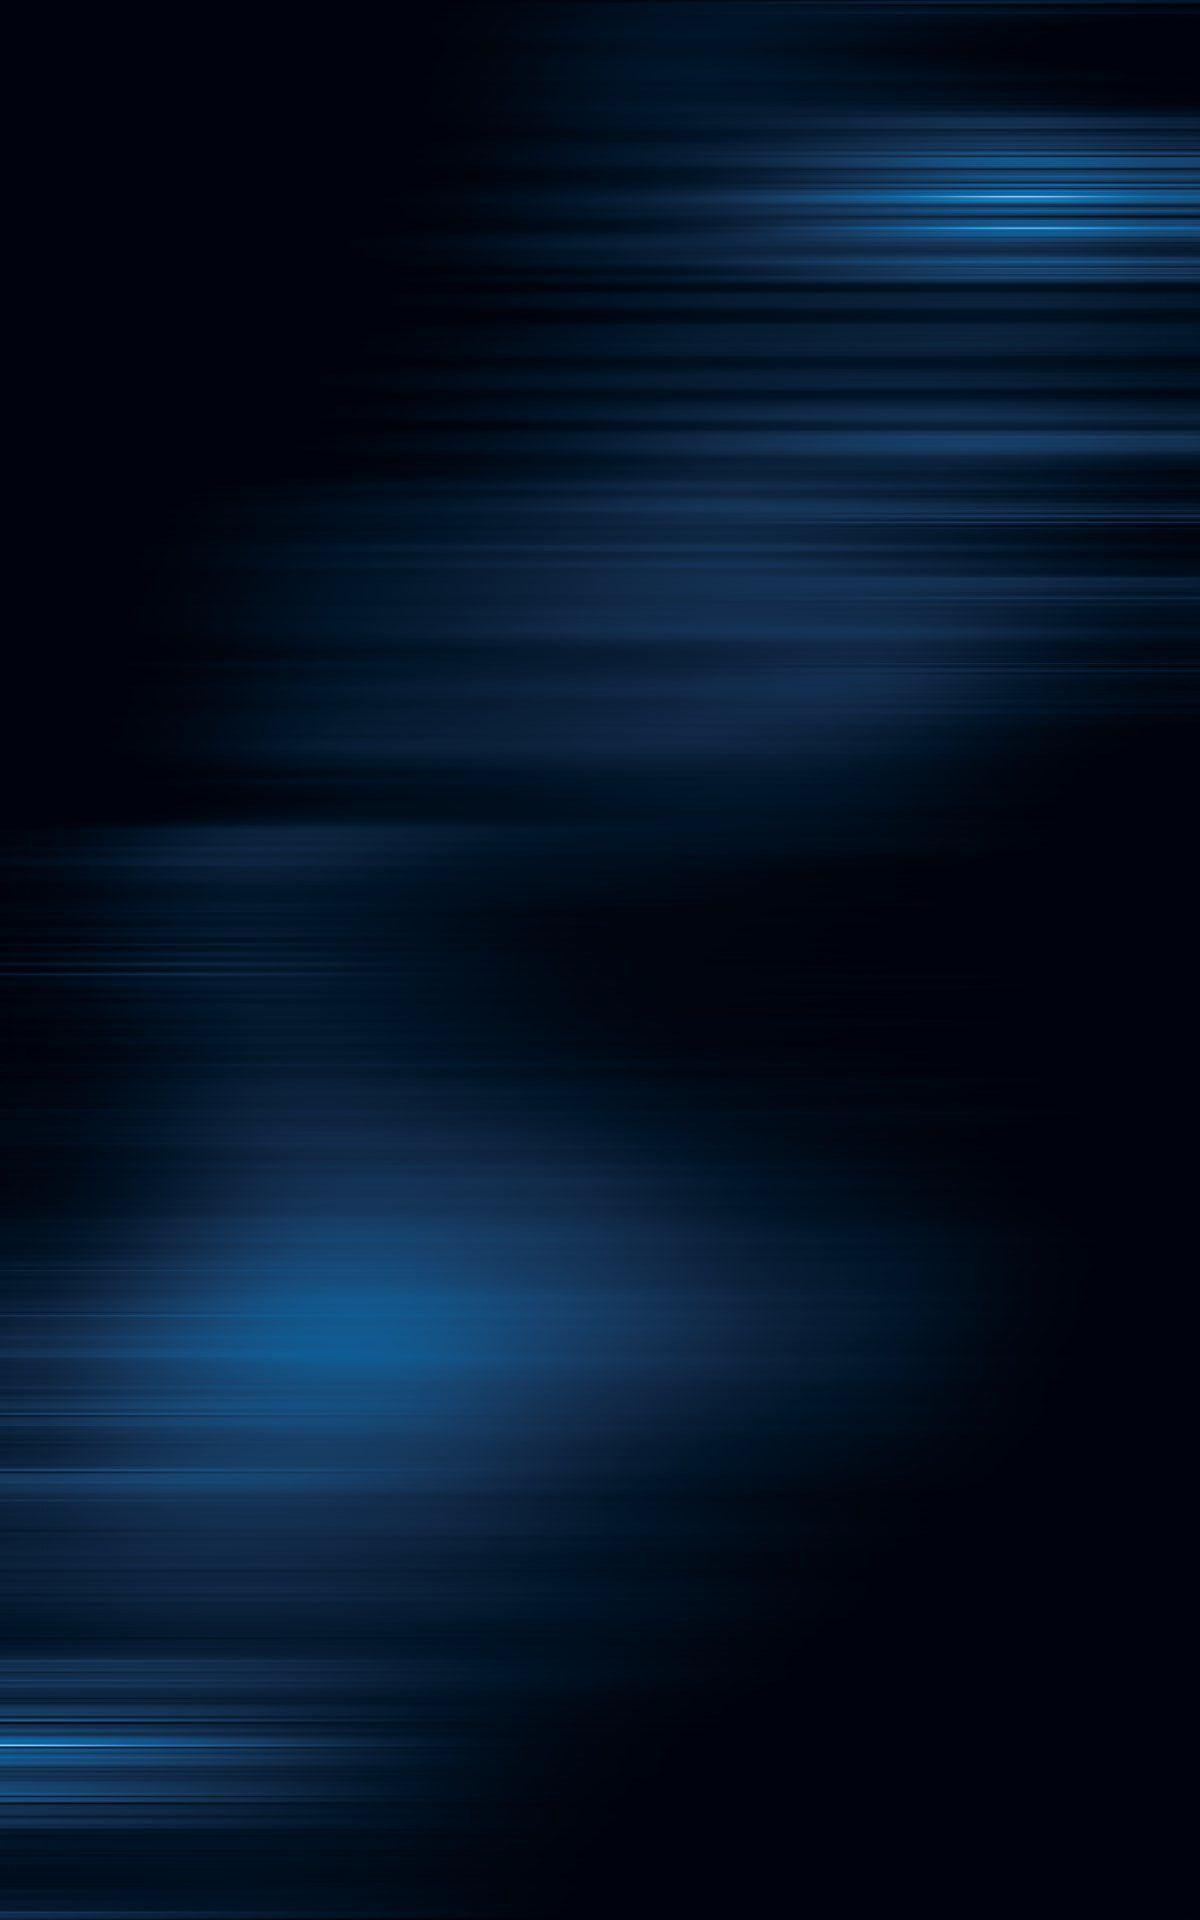 Hd Wallpaper Black And Blue Wallpaper For Desktop Background